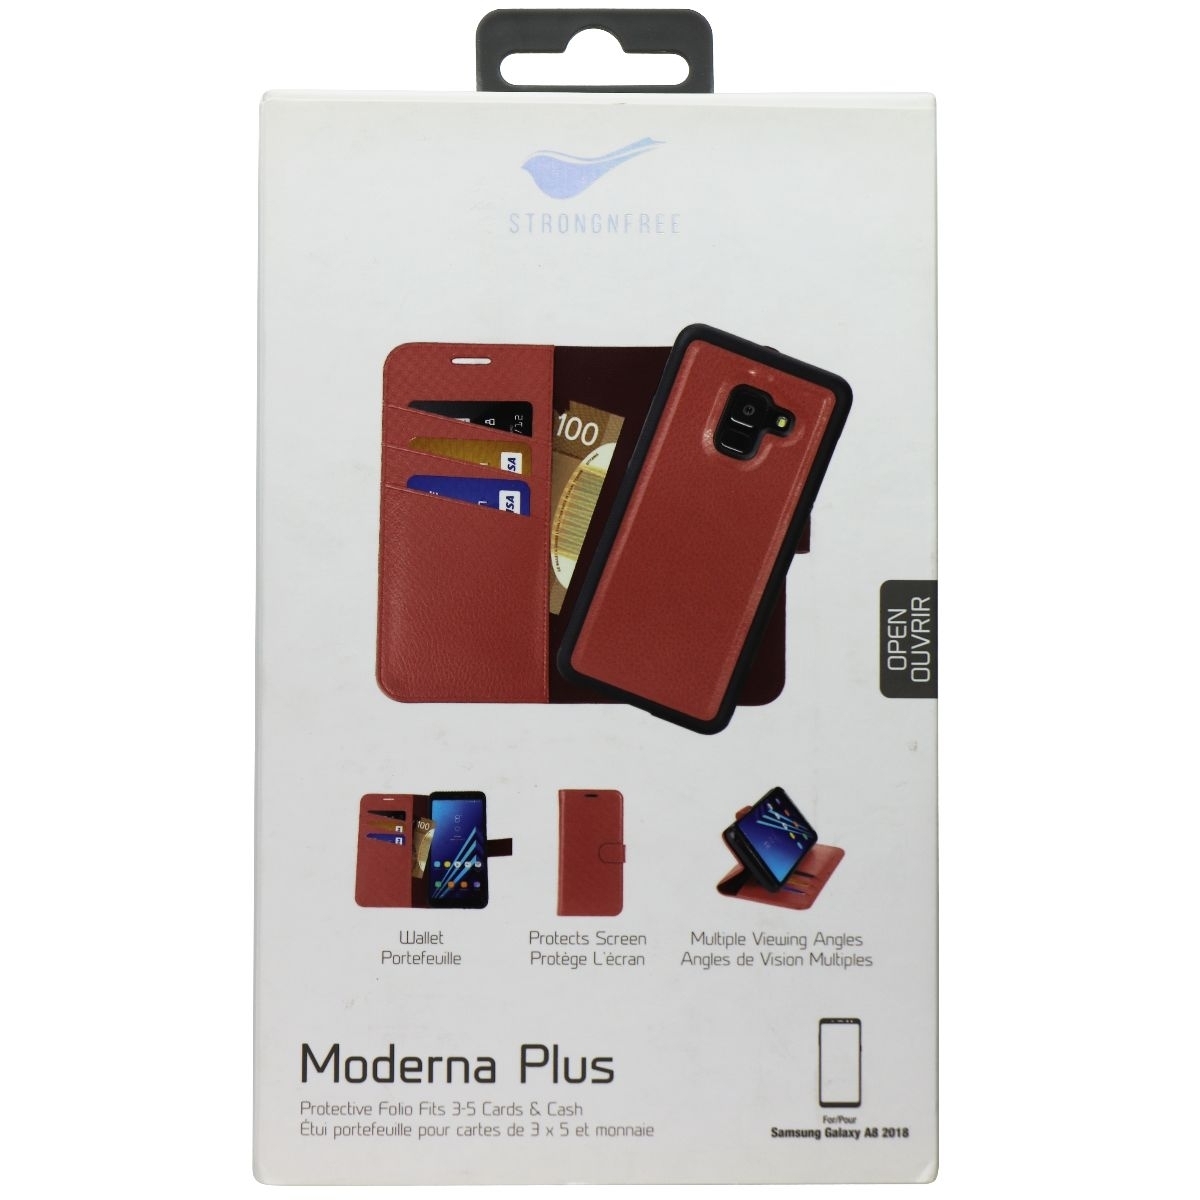 Strongnfree Moderna Plus Folio Wallet Case For Galaxy A8 (2018) - Dusty Red (Refurbished)